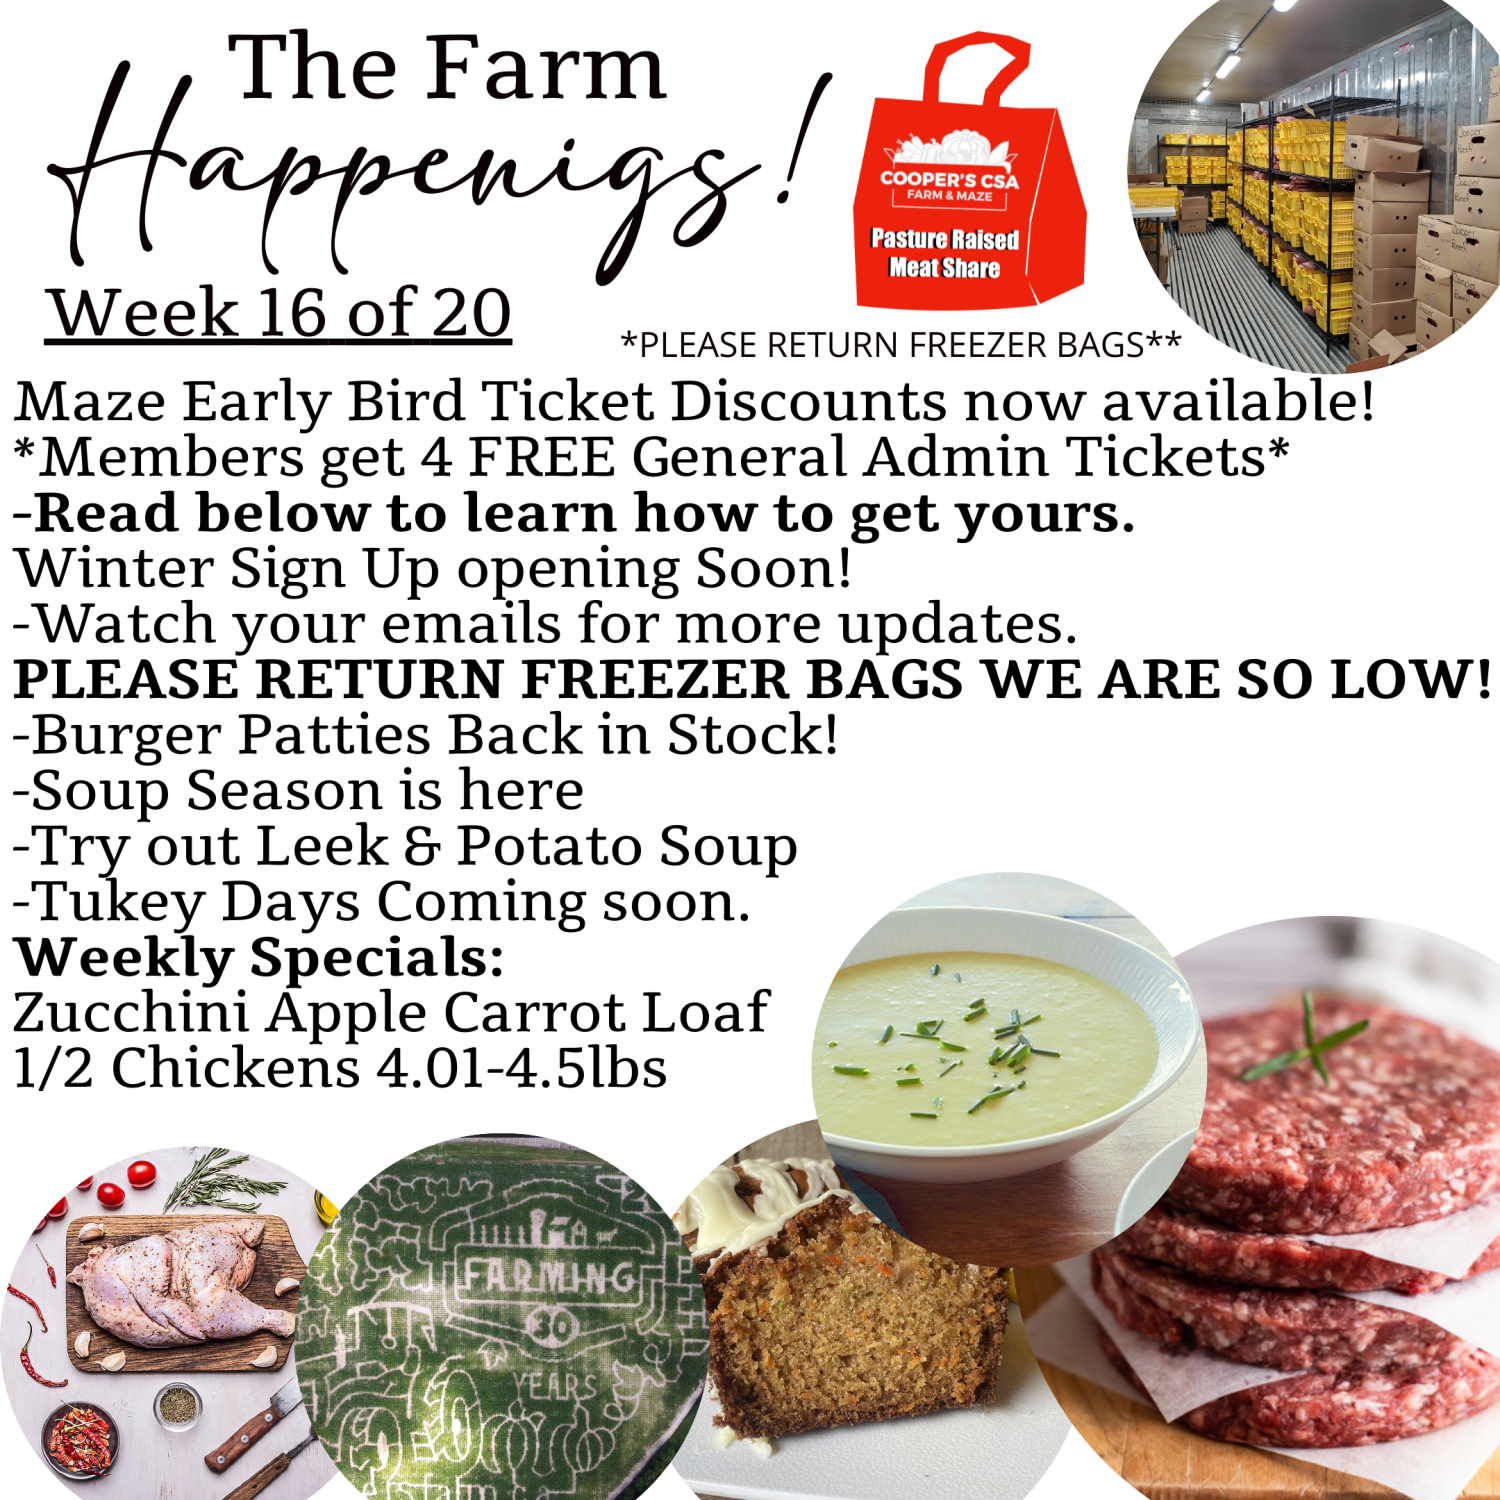 Next Happening: "Pasture Meat Shares"-Coopers CSA Farm Farm Happenings Week 16